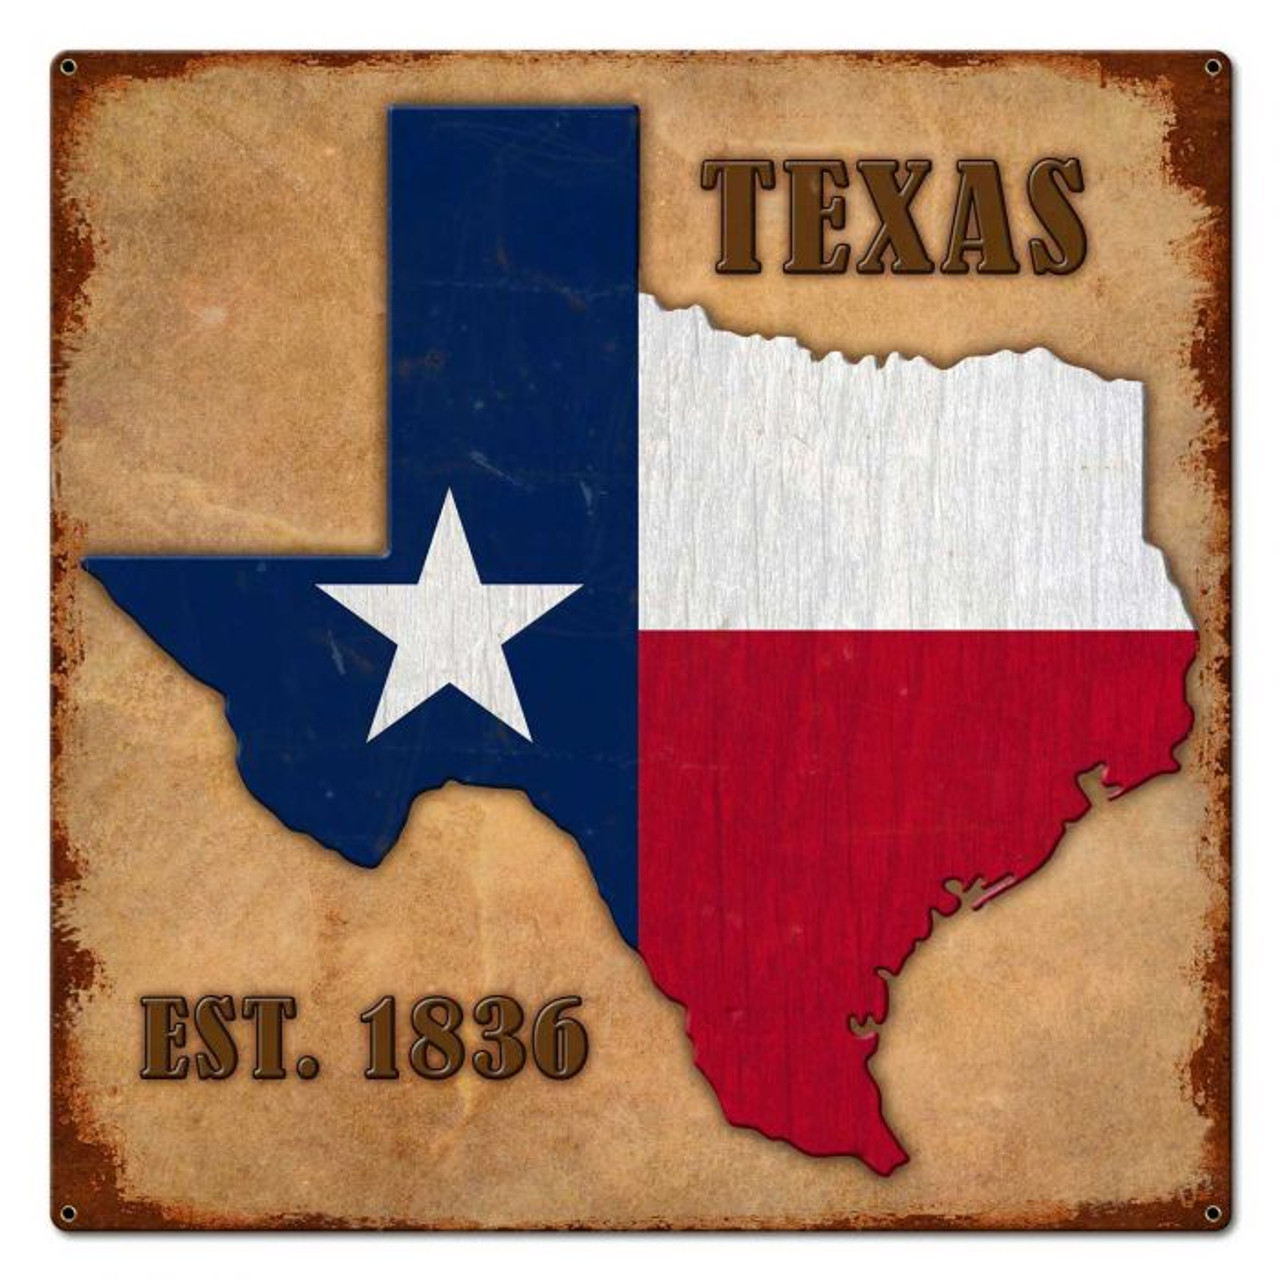 Texas Est. 1836 Metal Sign 24 x 24 Inches